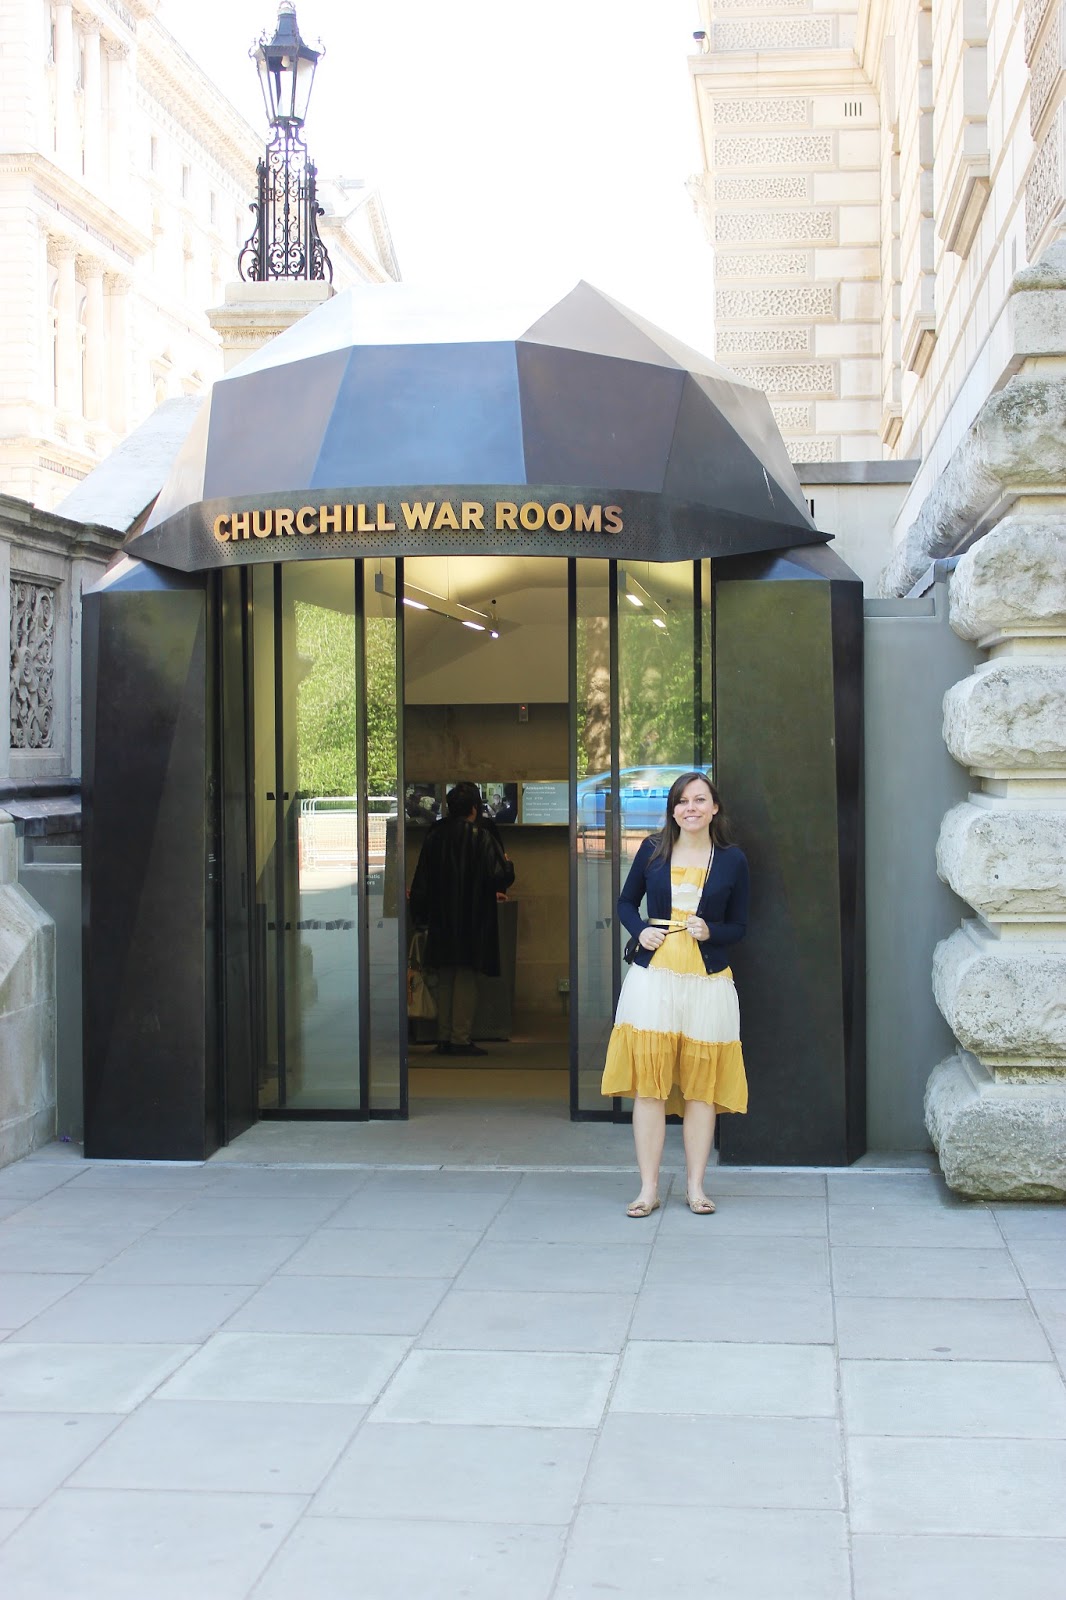 The Churchill War Rooms. 